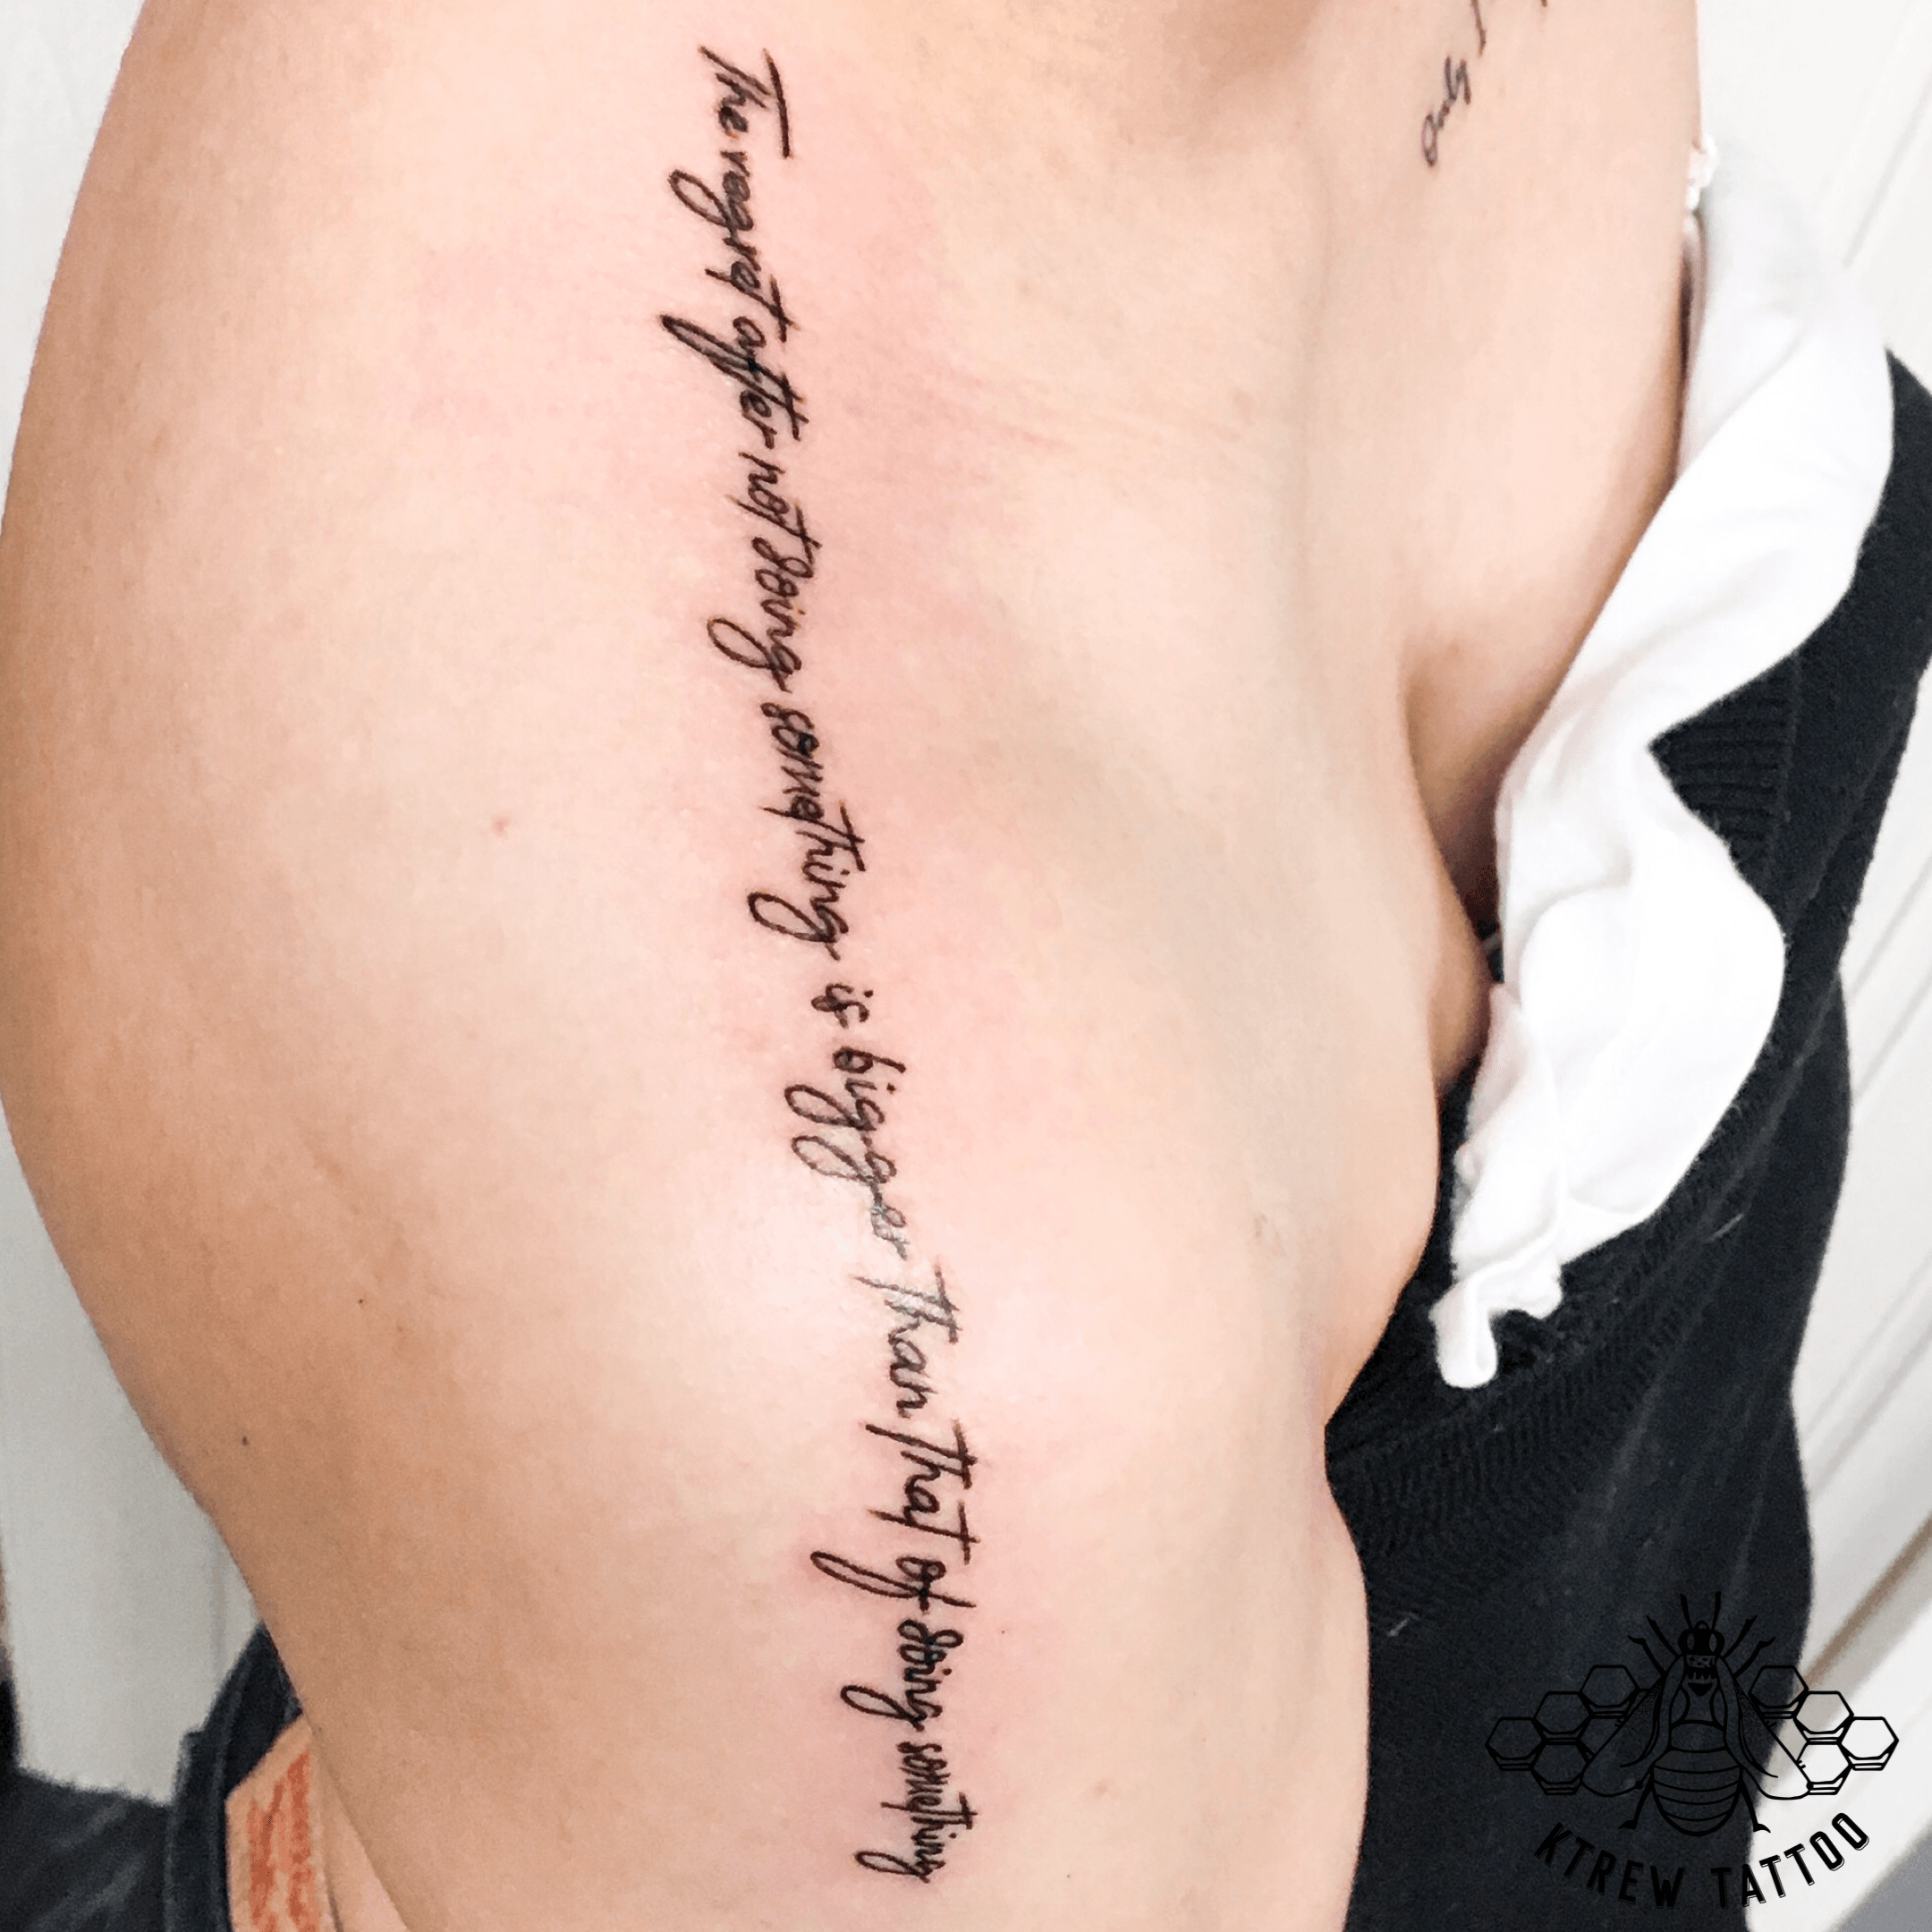 Lettering tattoo on top of shoulder